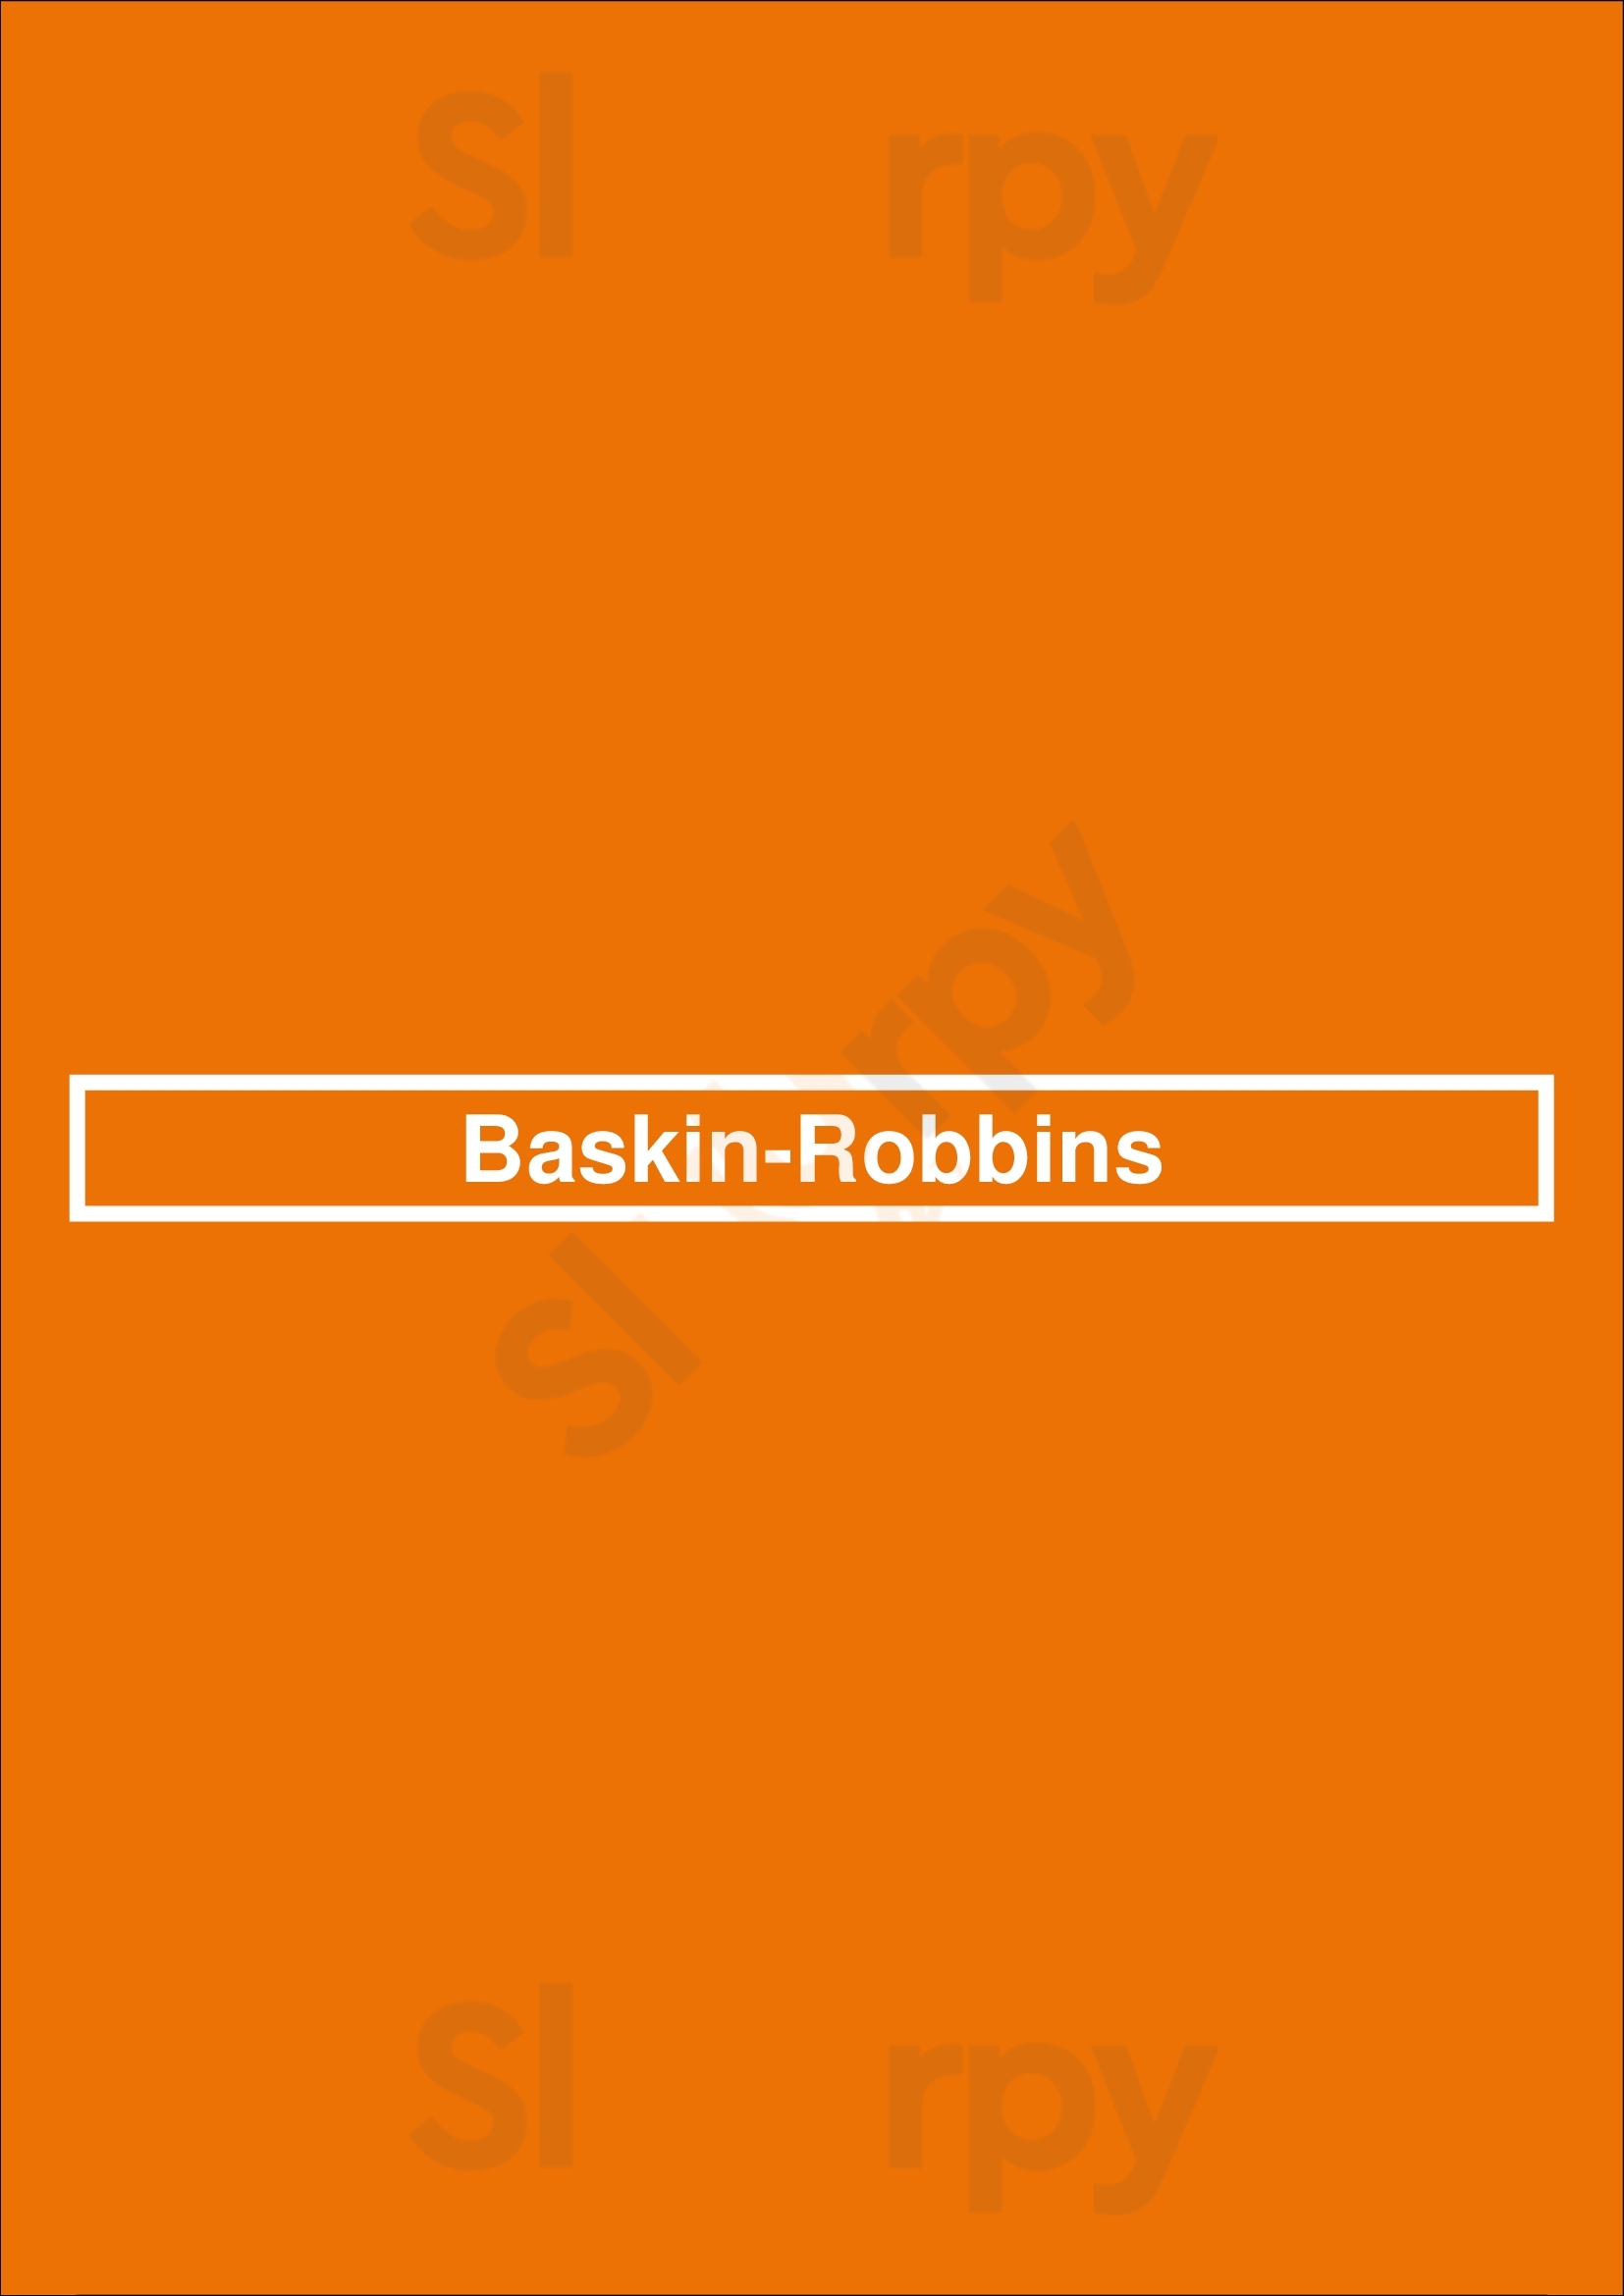 Baskin-robbins Ottawa Menu - 1